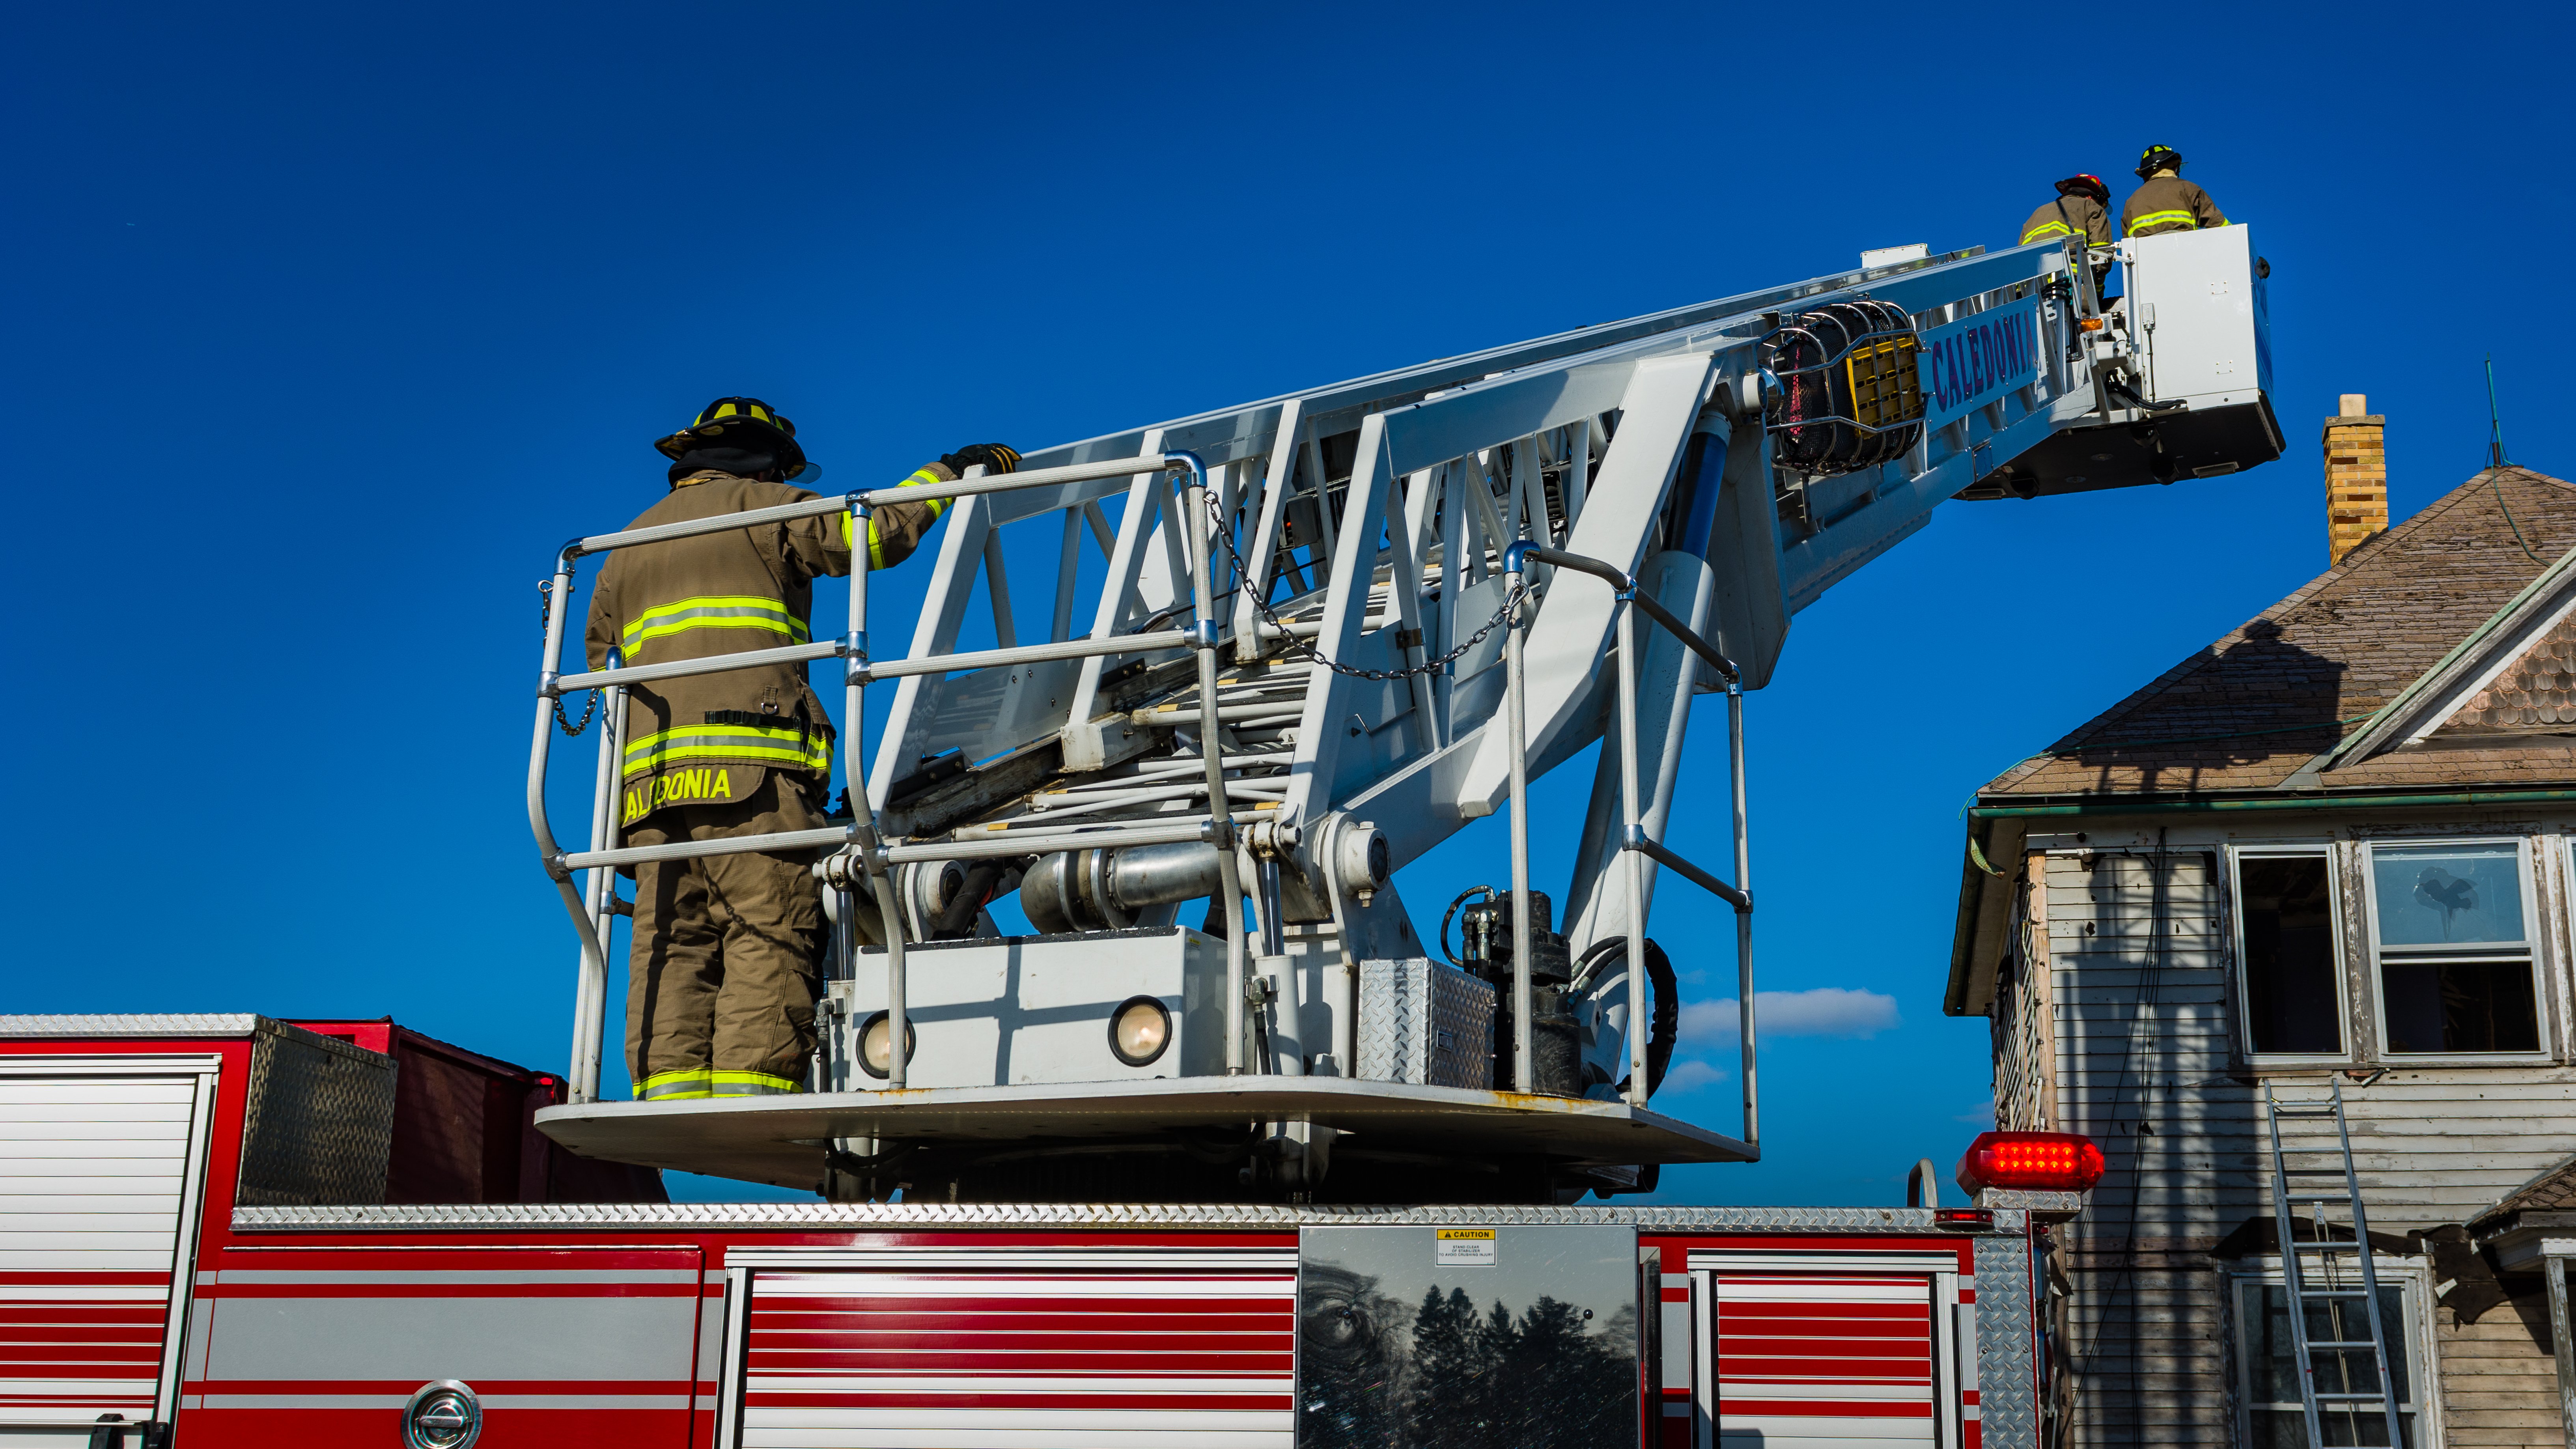 Firemen doing a chimney rescue | Source: Shutterstock